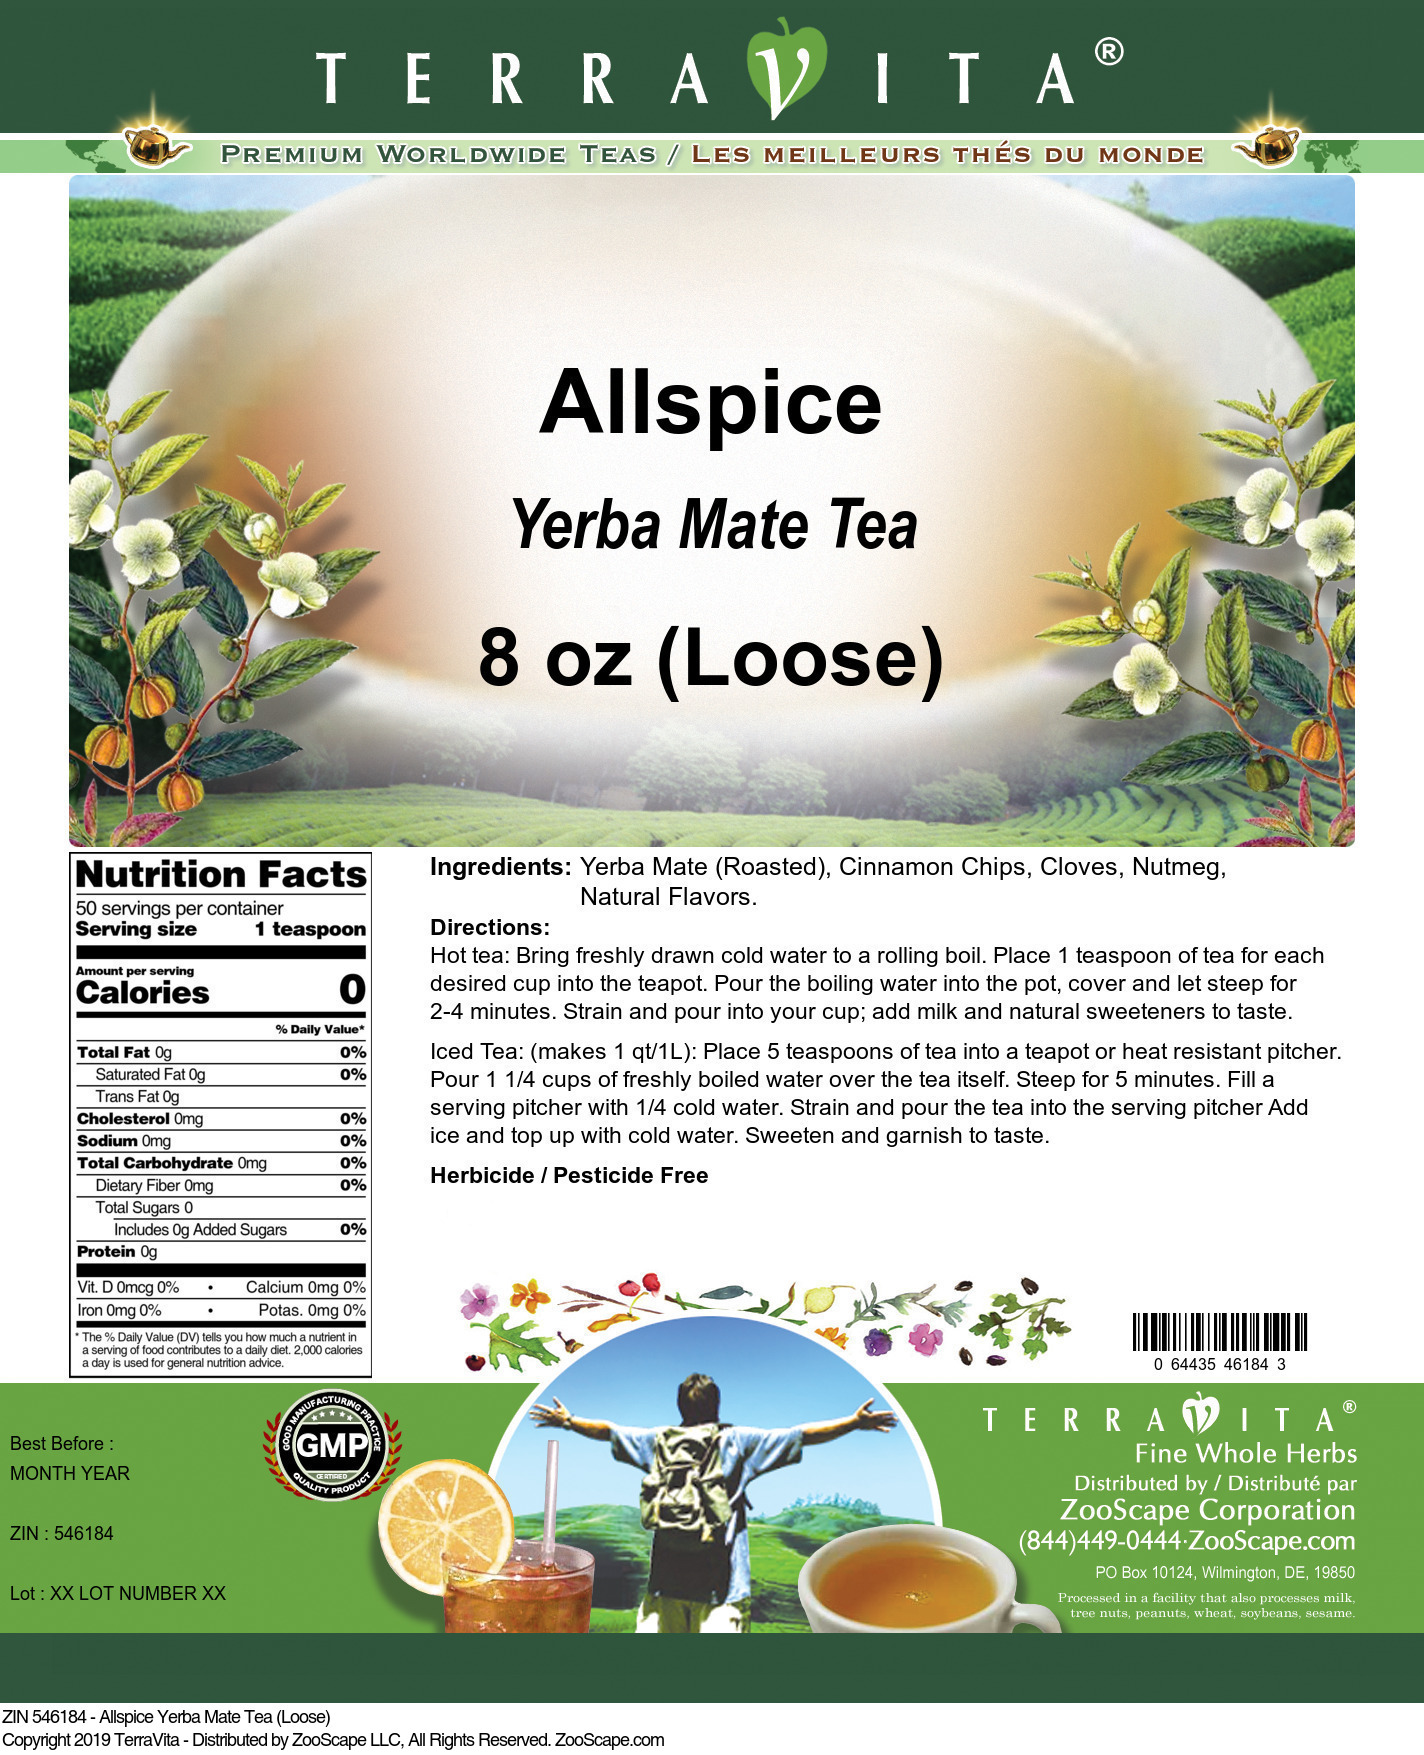 Allspice Yerba Mate Tea (Loose) - Label